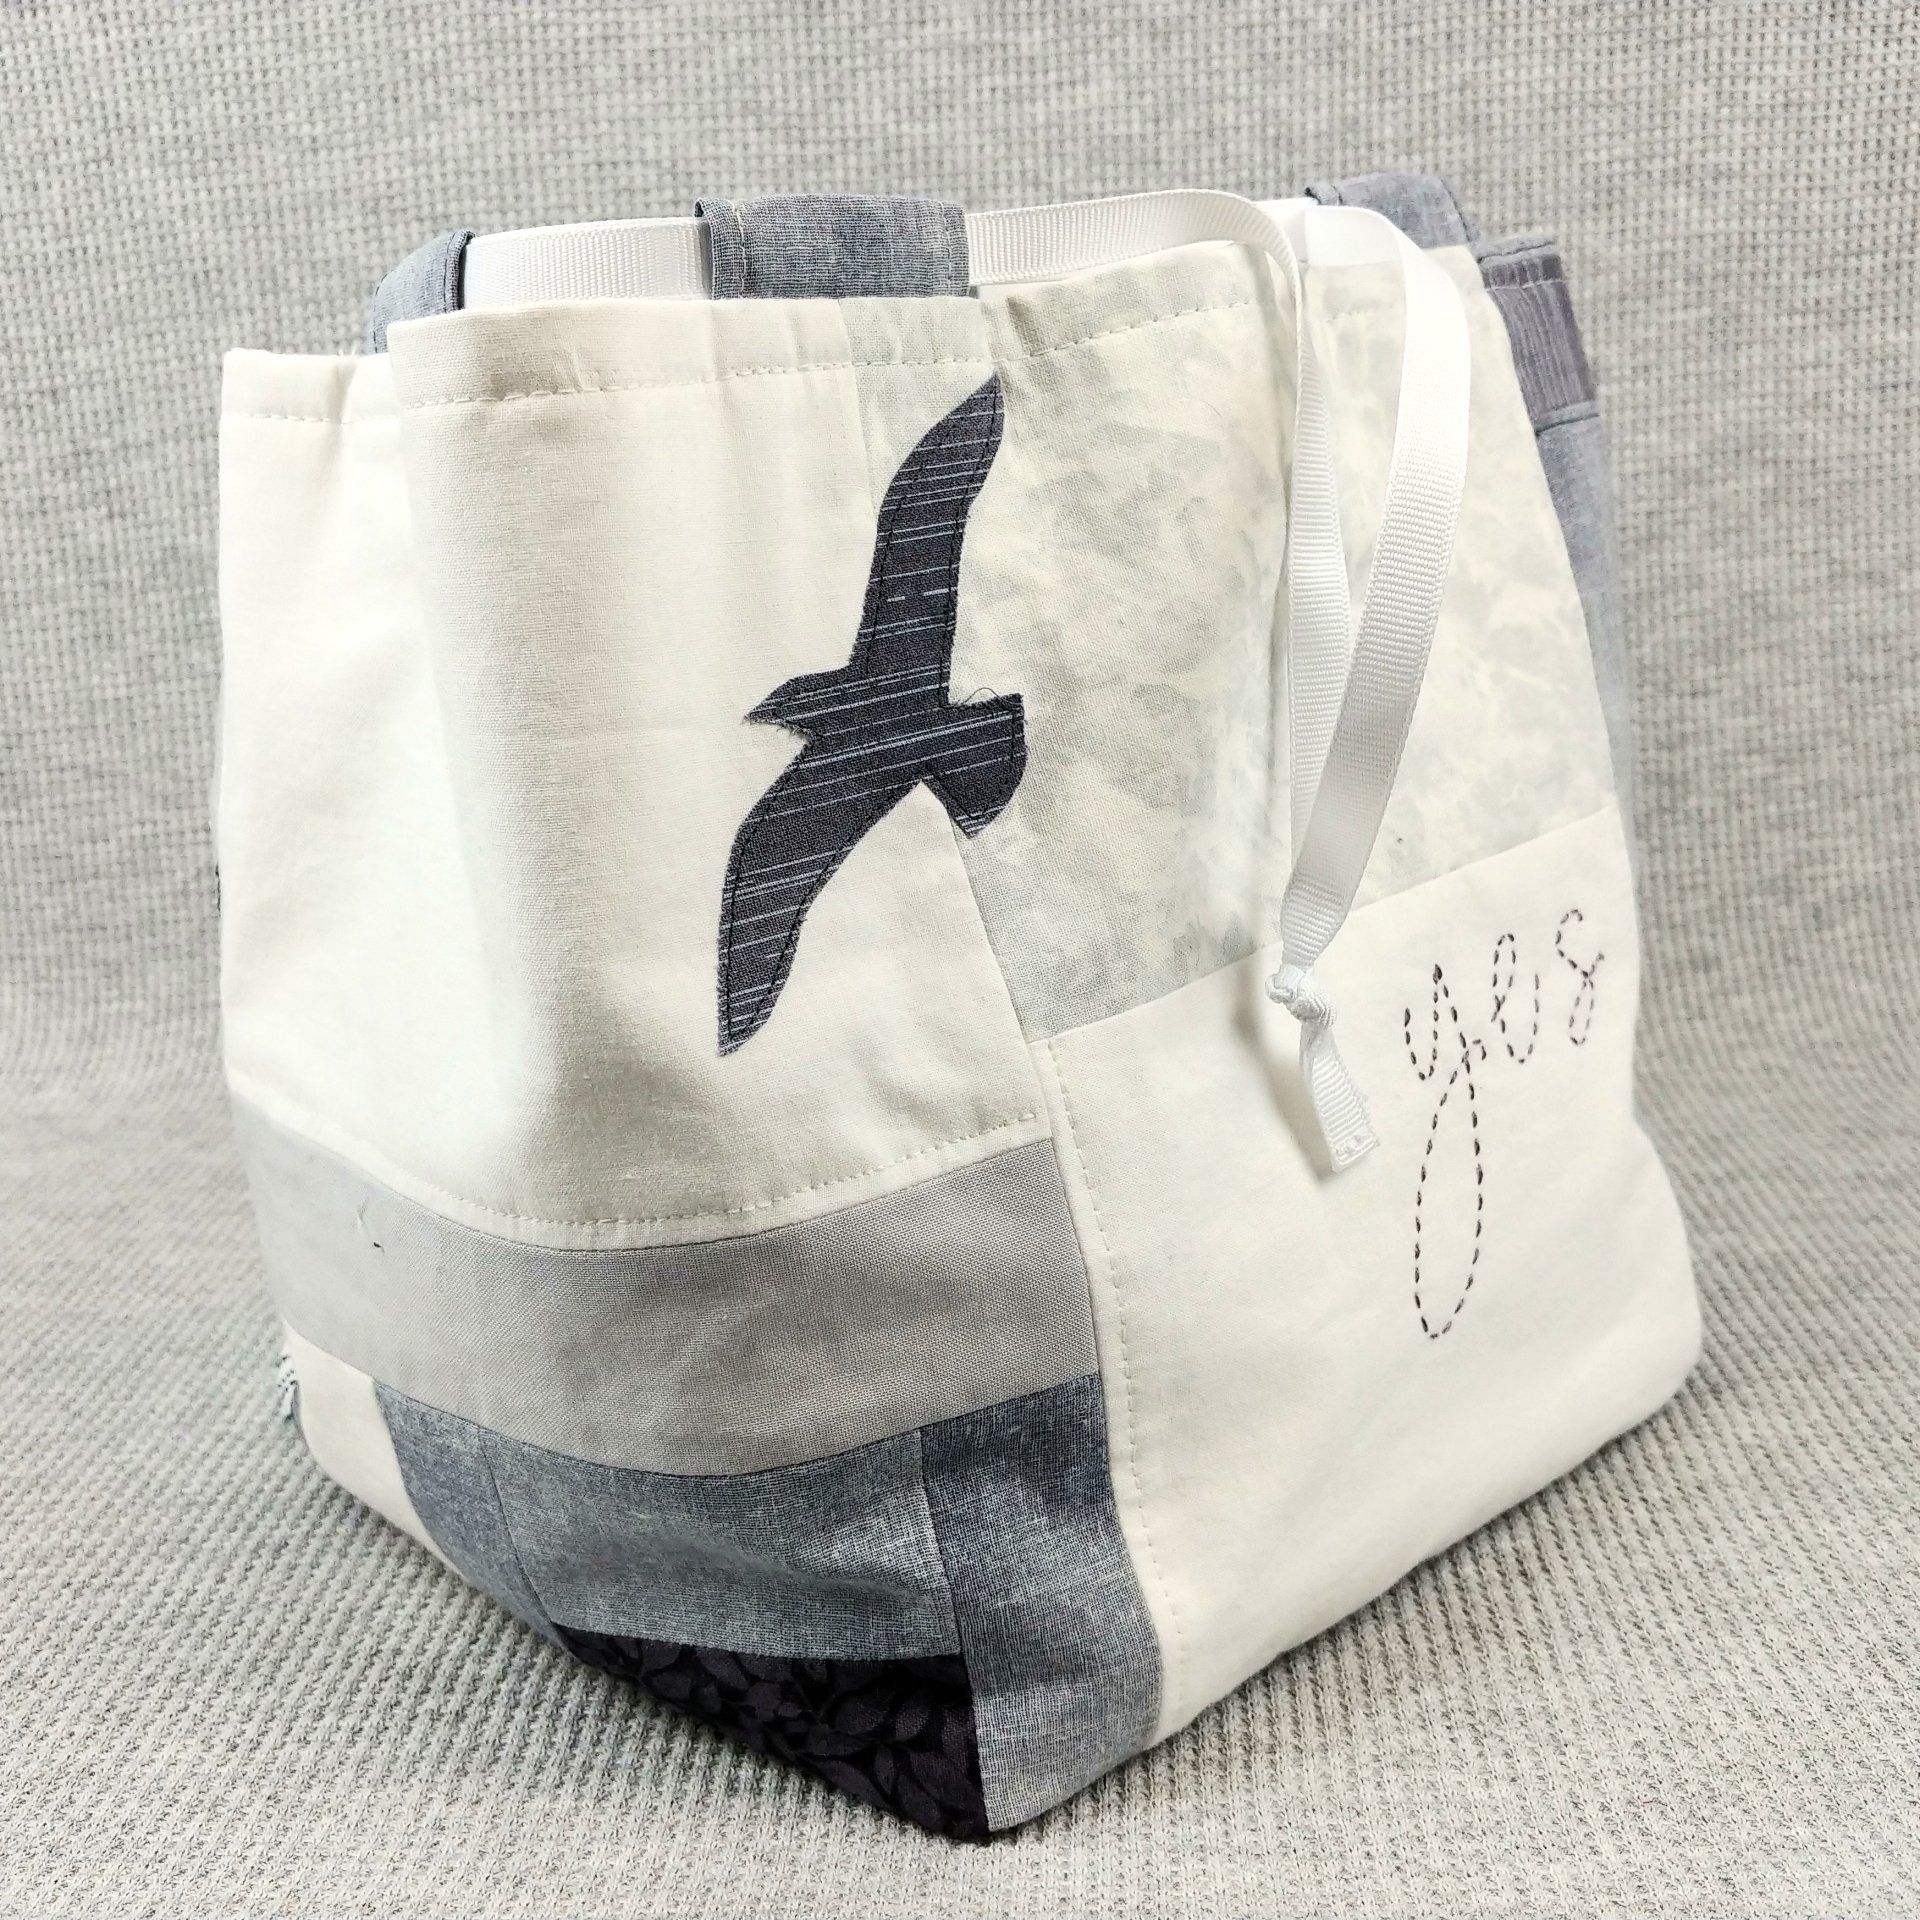 handmade bag from blue skin yarns story bag permission granted